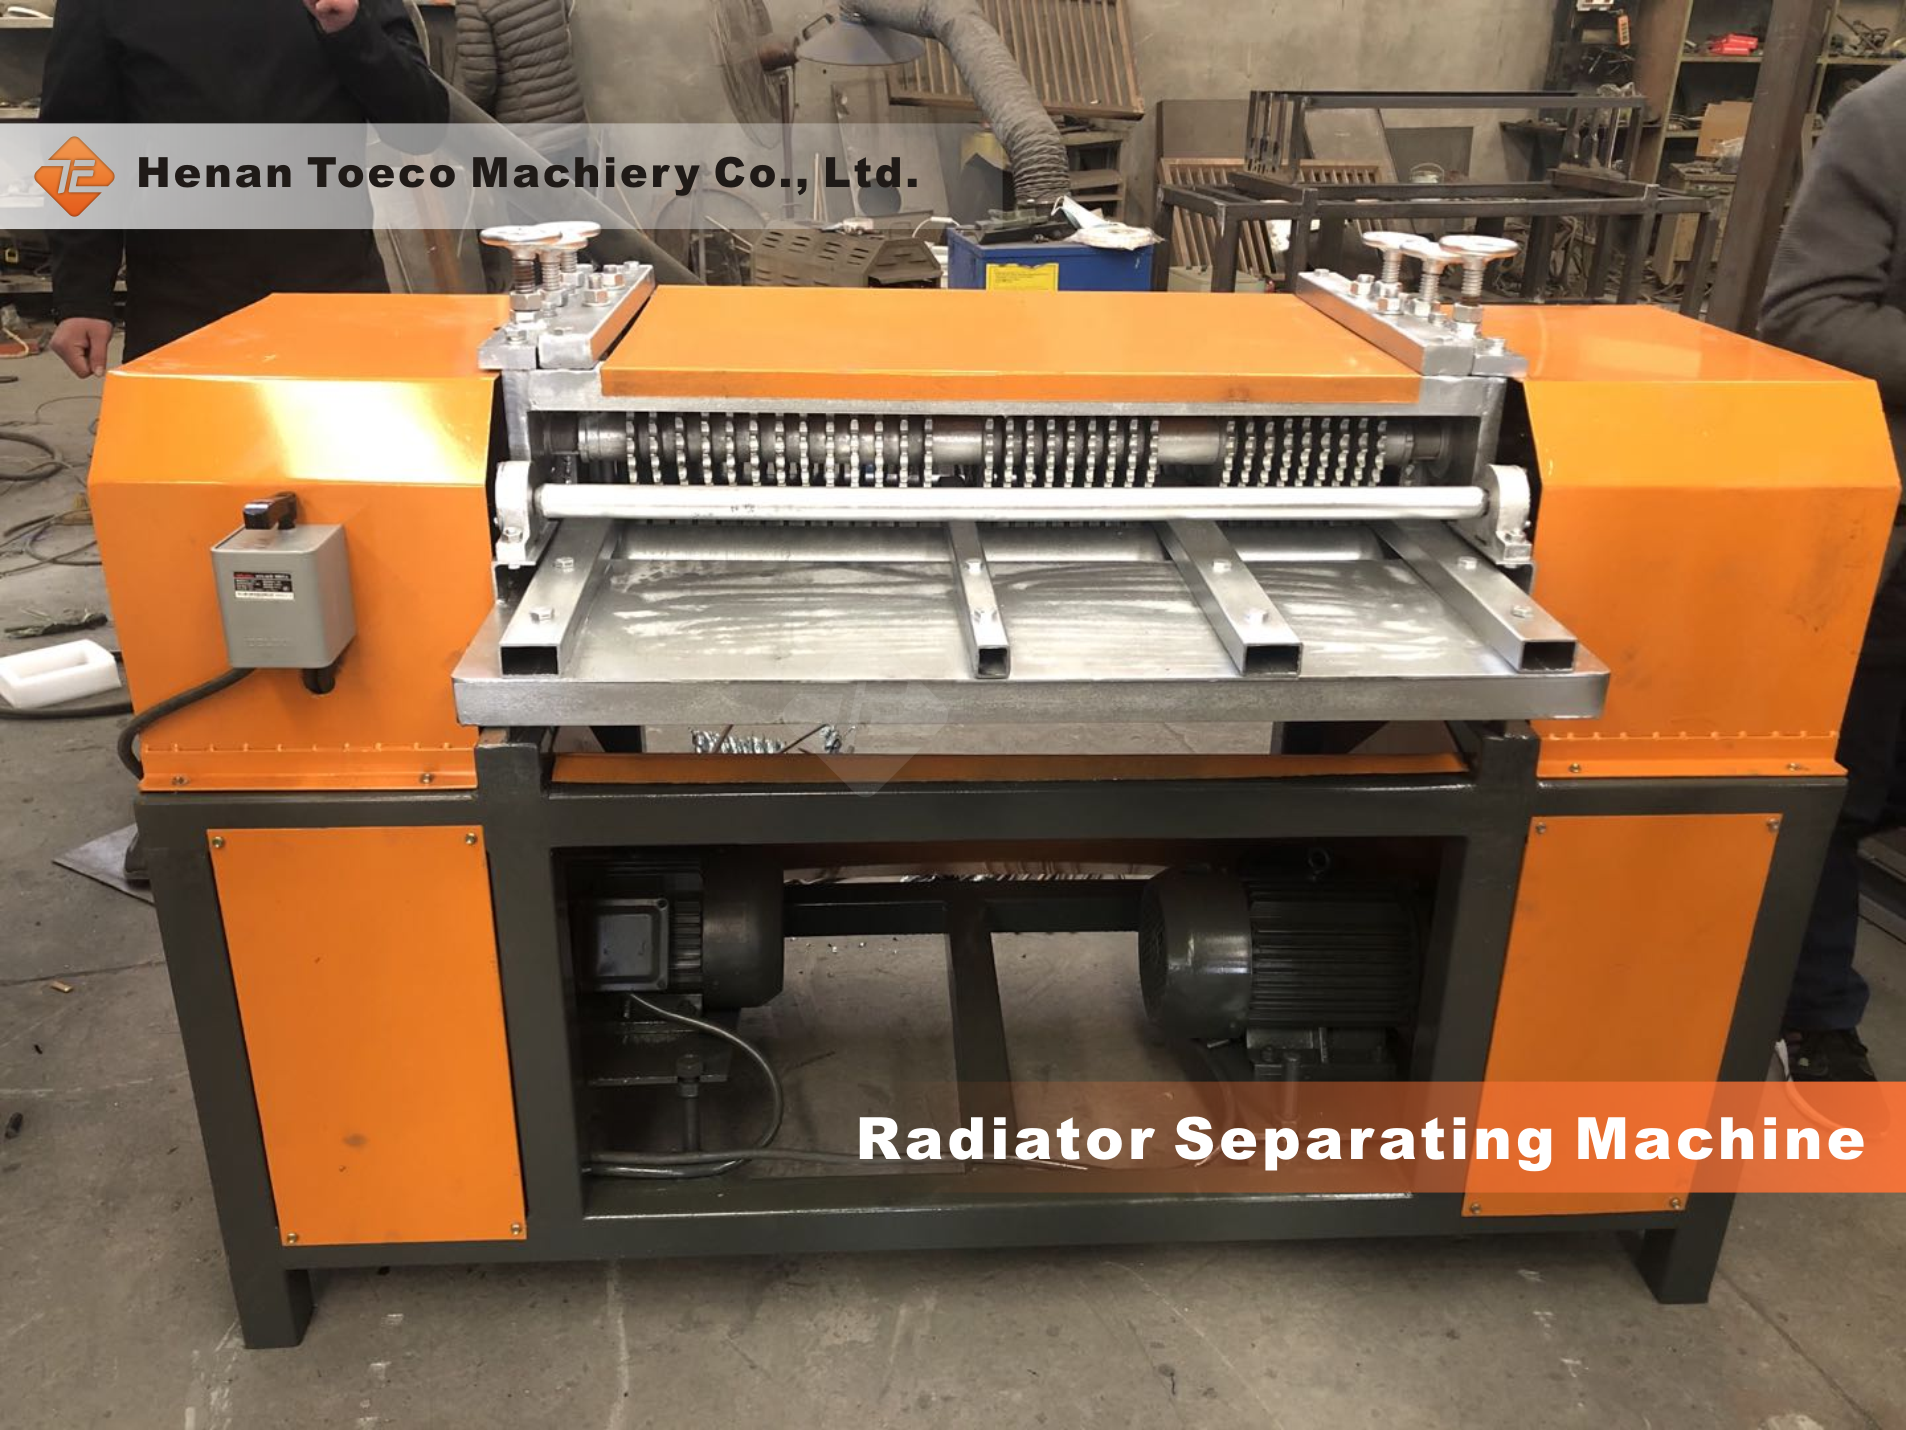 Radiator Separating Machine